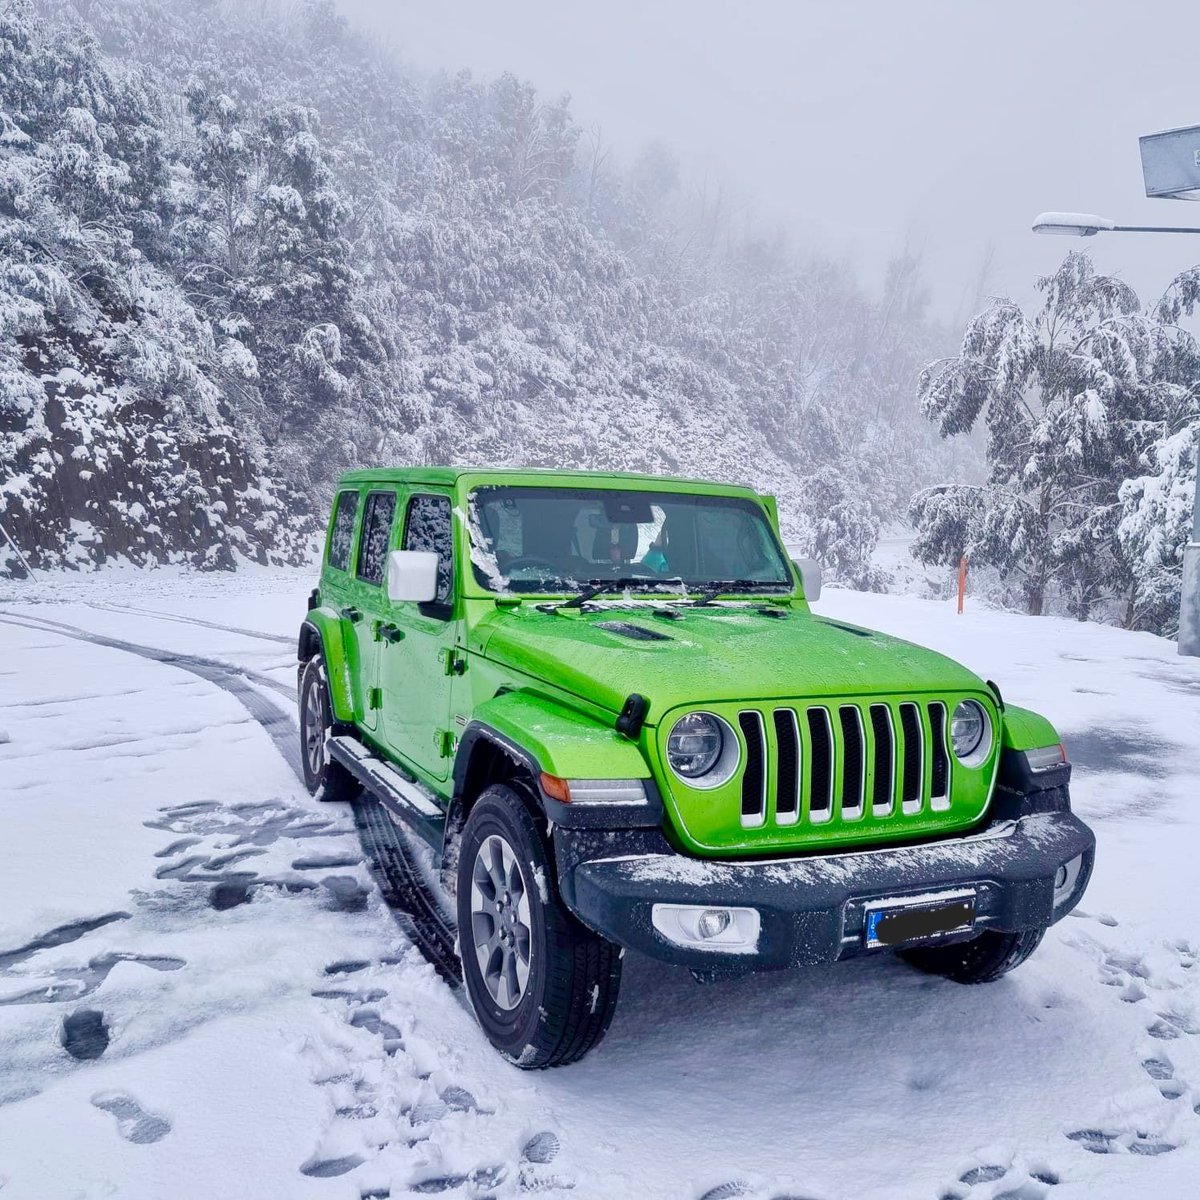 #mounthotham #mthotham #snow #seehighcountry #snowfall #winter2022 #victoria #australianalps
#jeep #jeeplife #jeepwrangler #jeepwranglerunlimited #jeepwranglerjl #jeepwrangleroverland